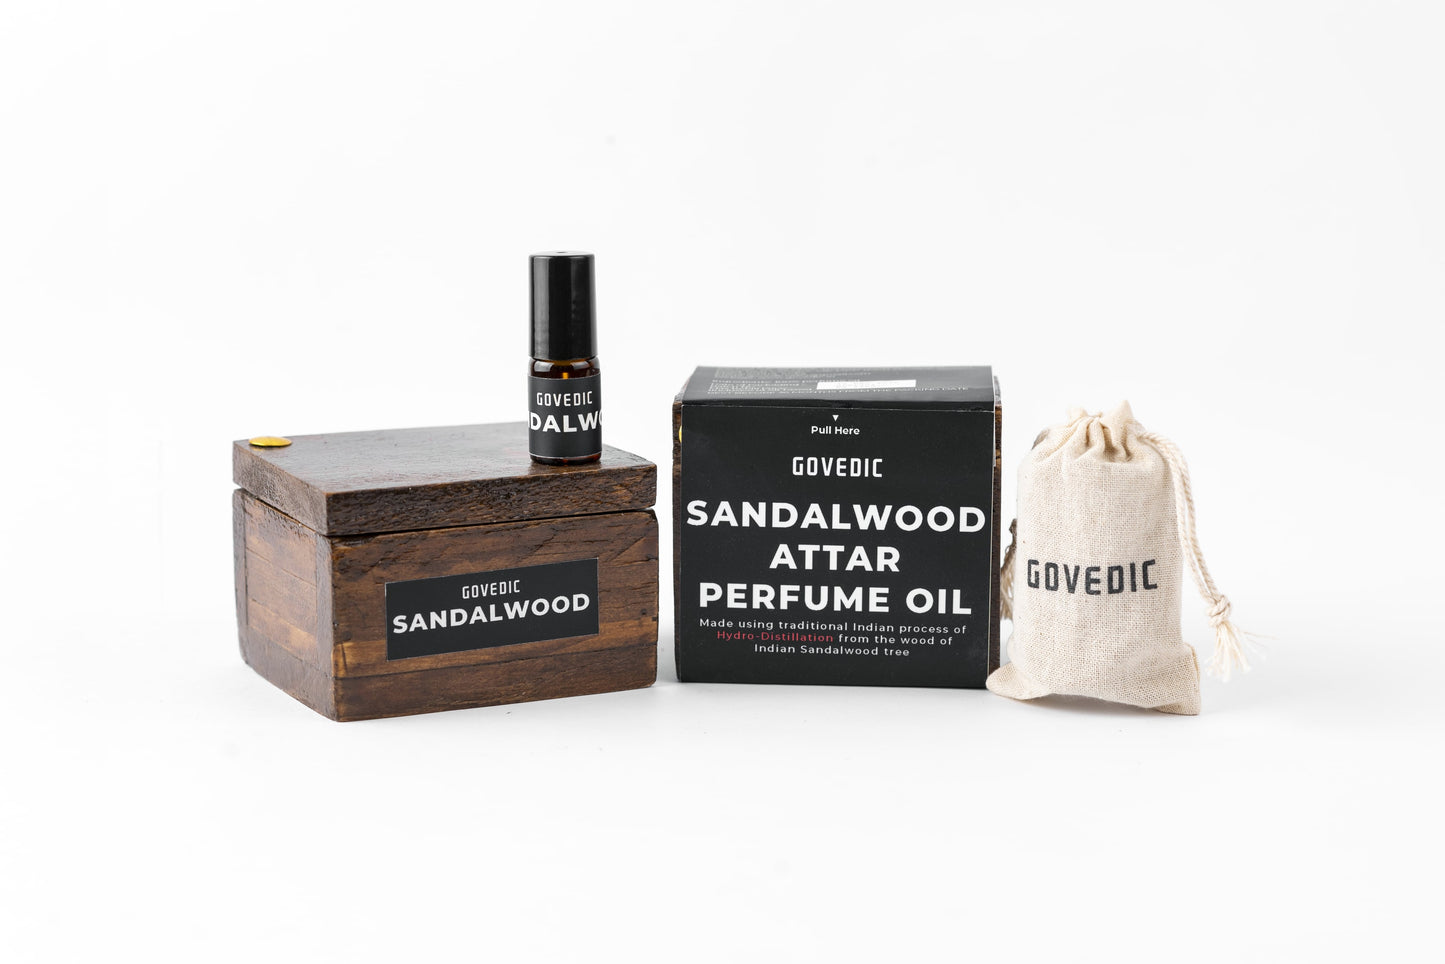 buy Govedic Sandalwood Attar | Chandan Perfume Oil 100% pure online